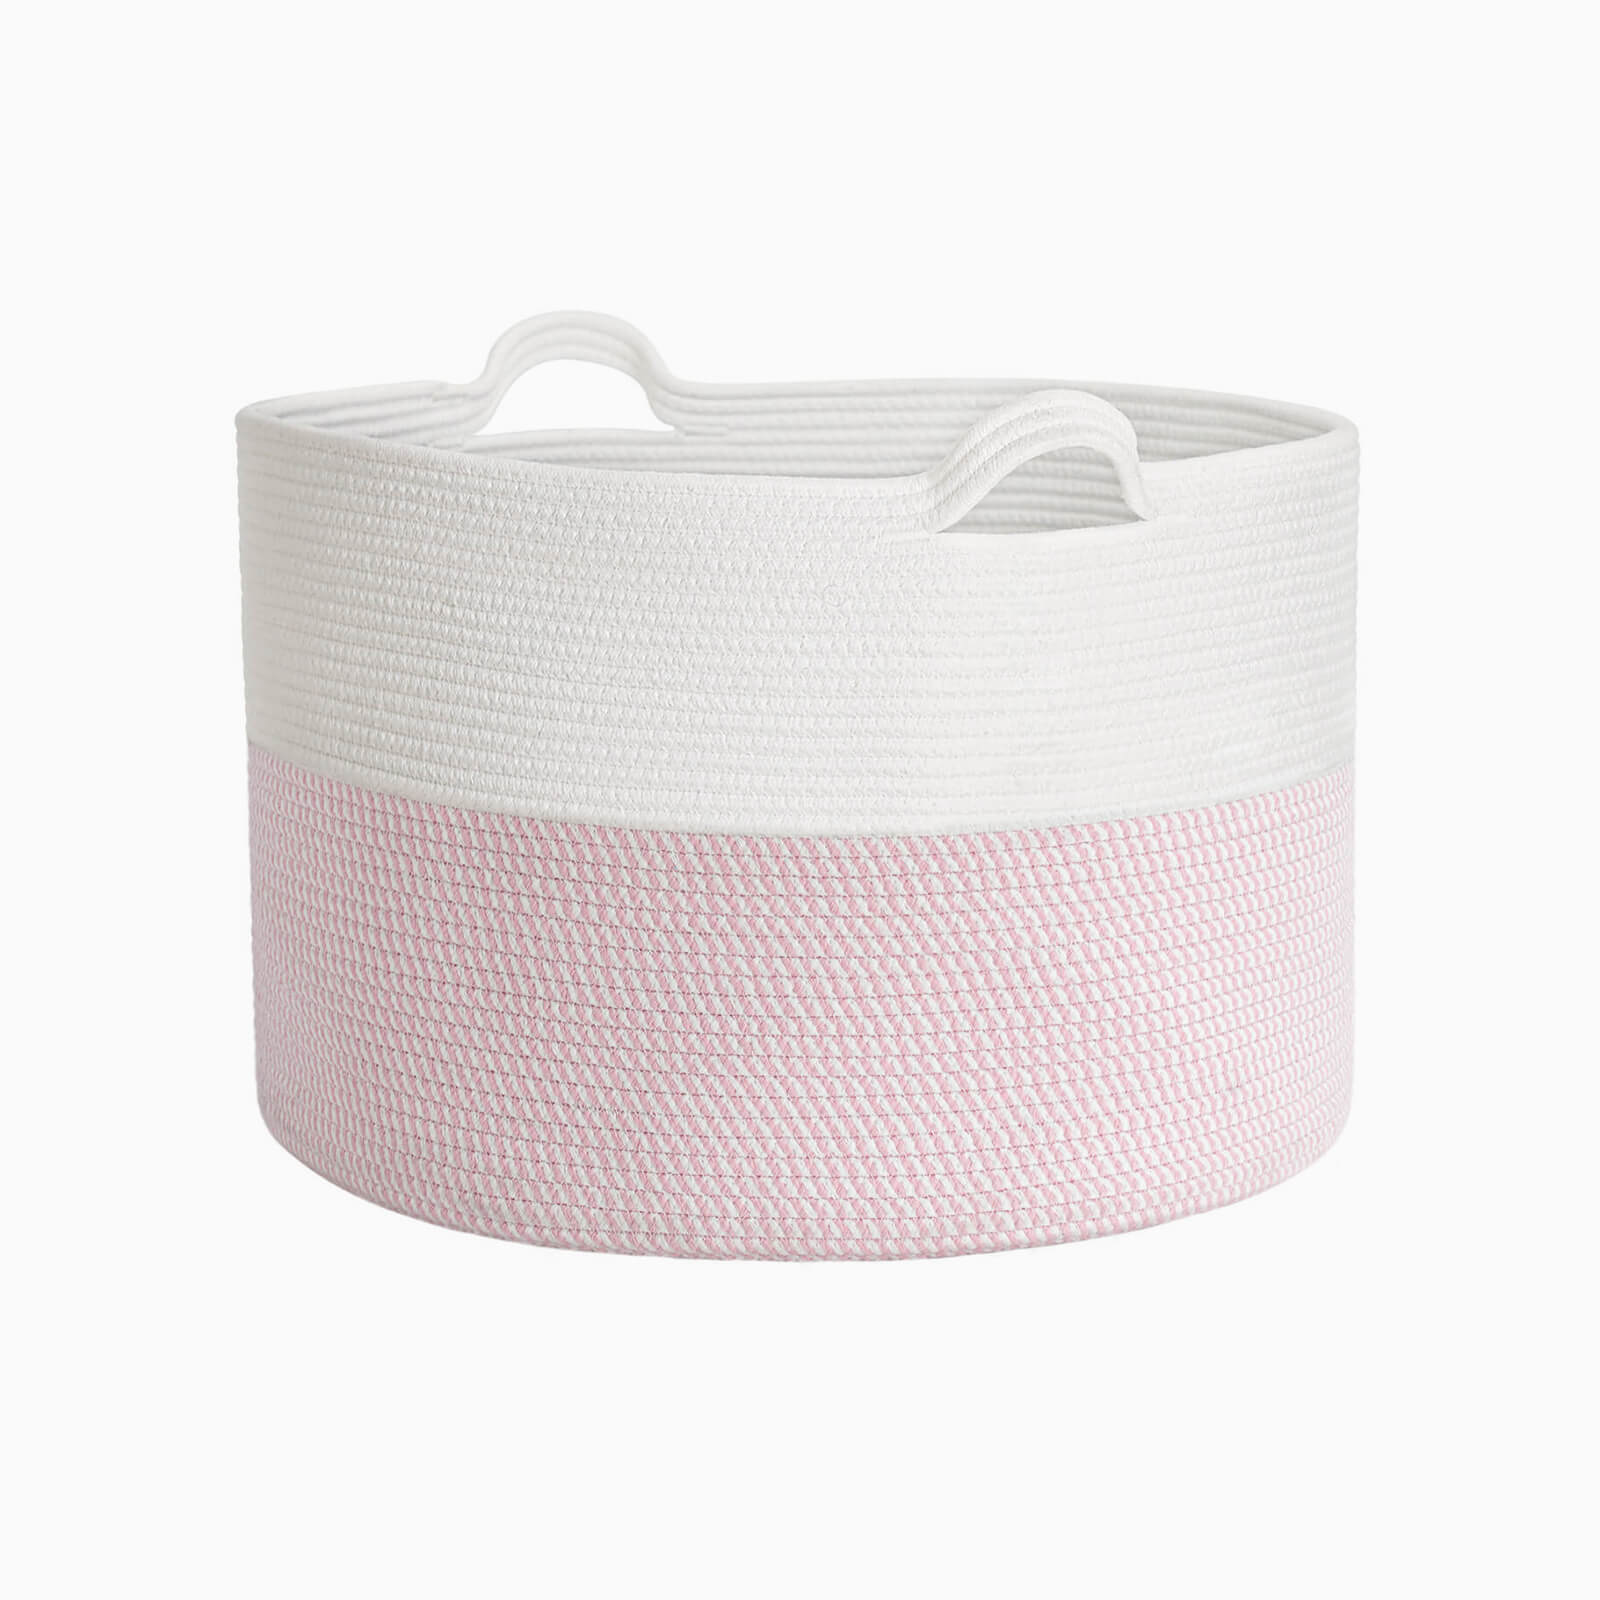 Goodpick White & Pink XXXL Large Cotton Rope Storage Basket